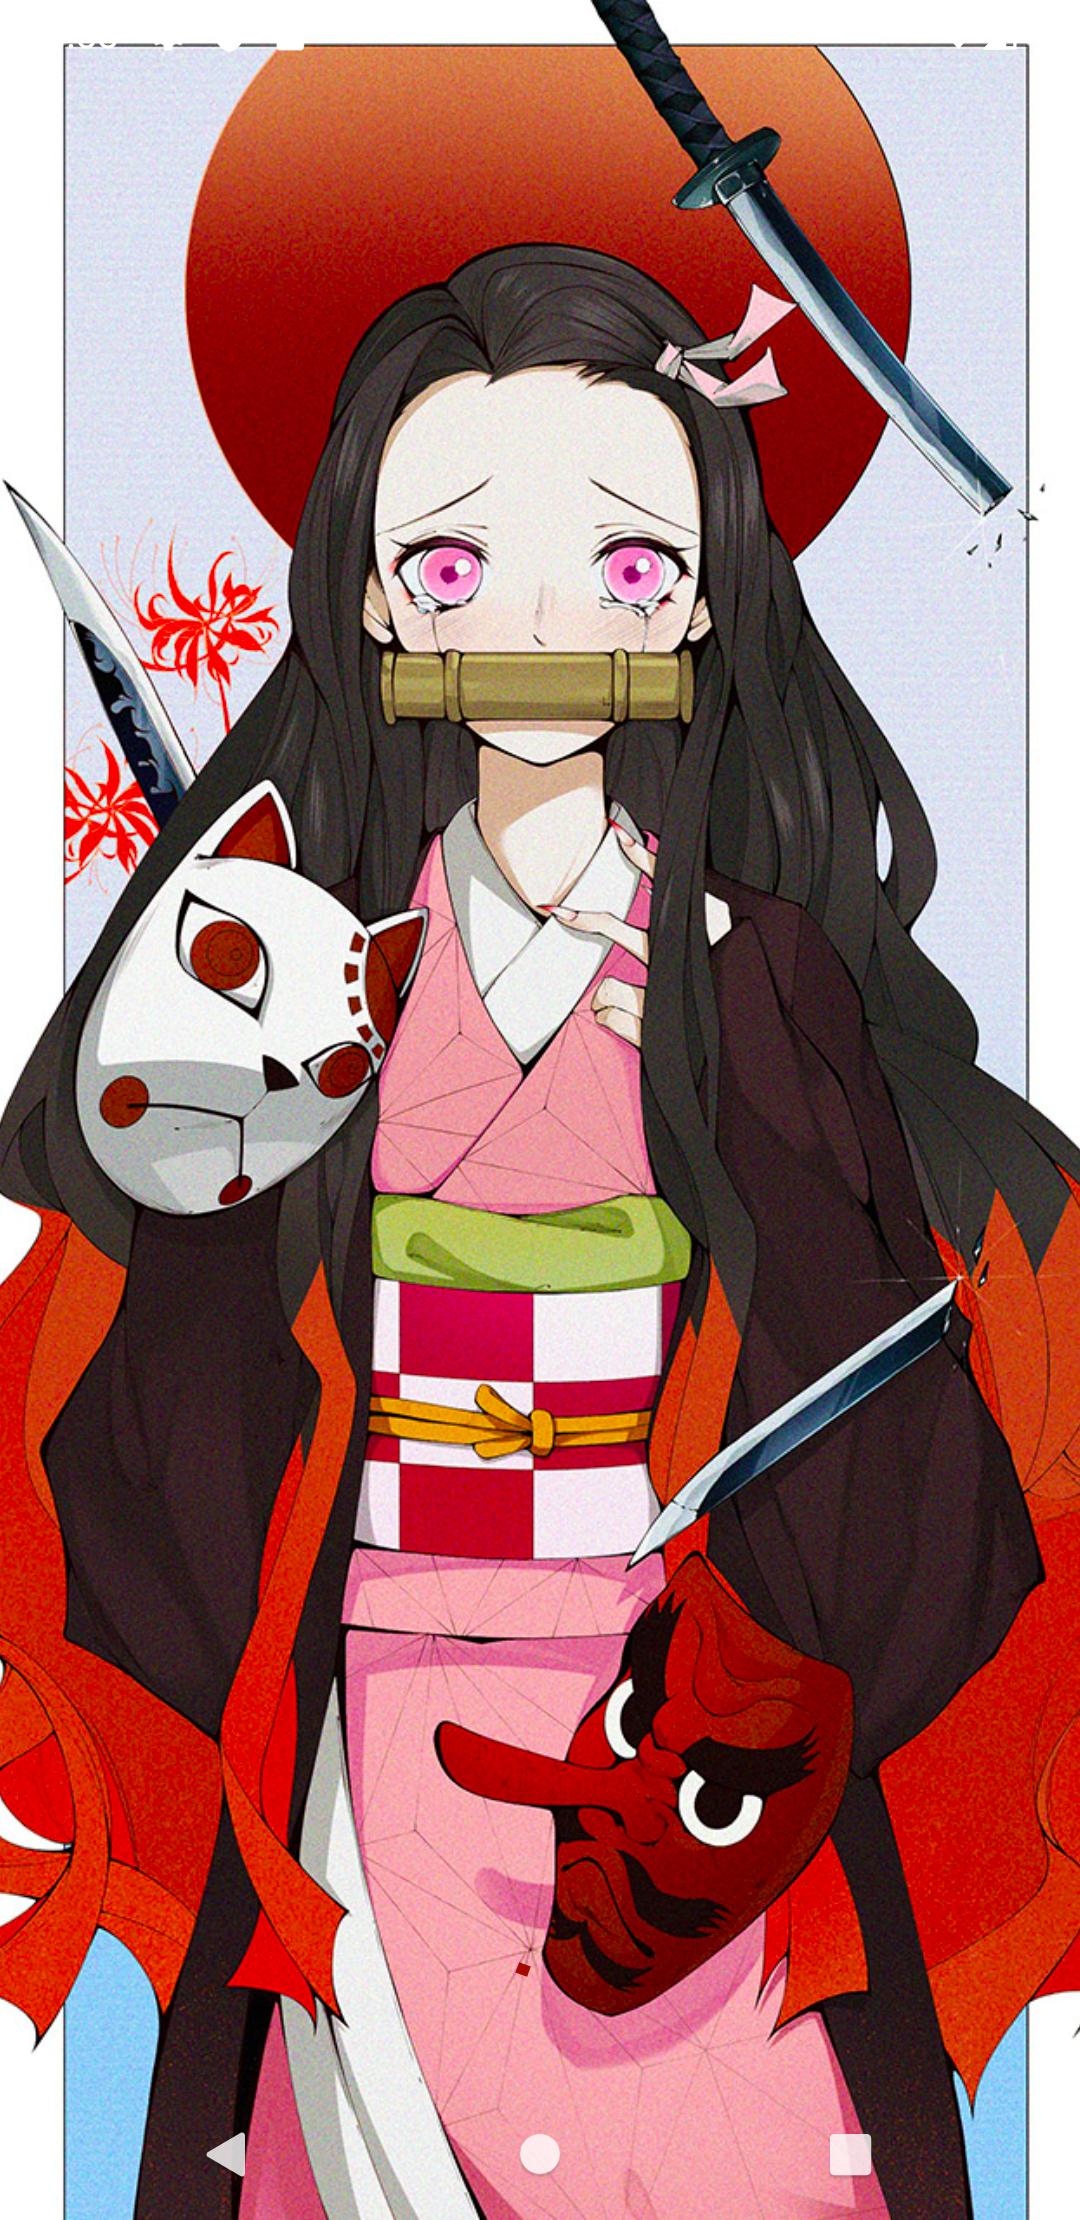 Aesthetic Demon Slayer wallpaper with Nezuko in a kimono, a fox mask, and a red sun in the background. - Nezuko